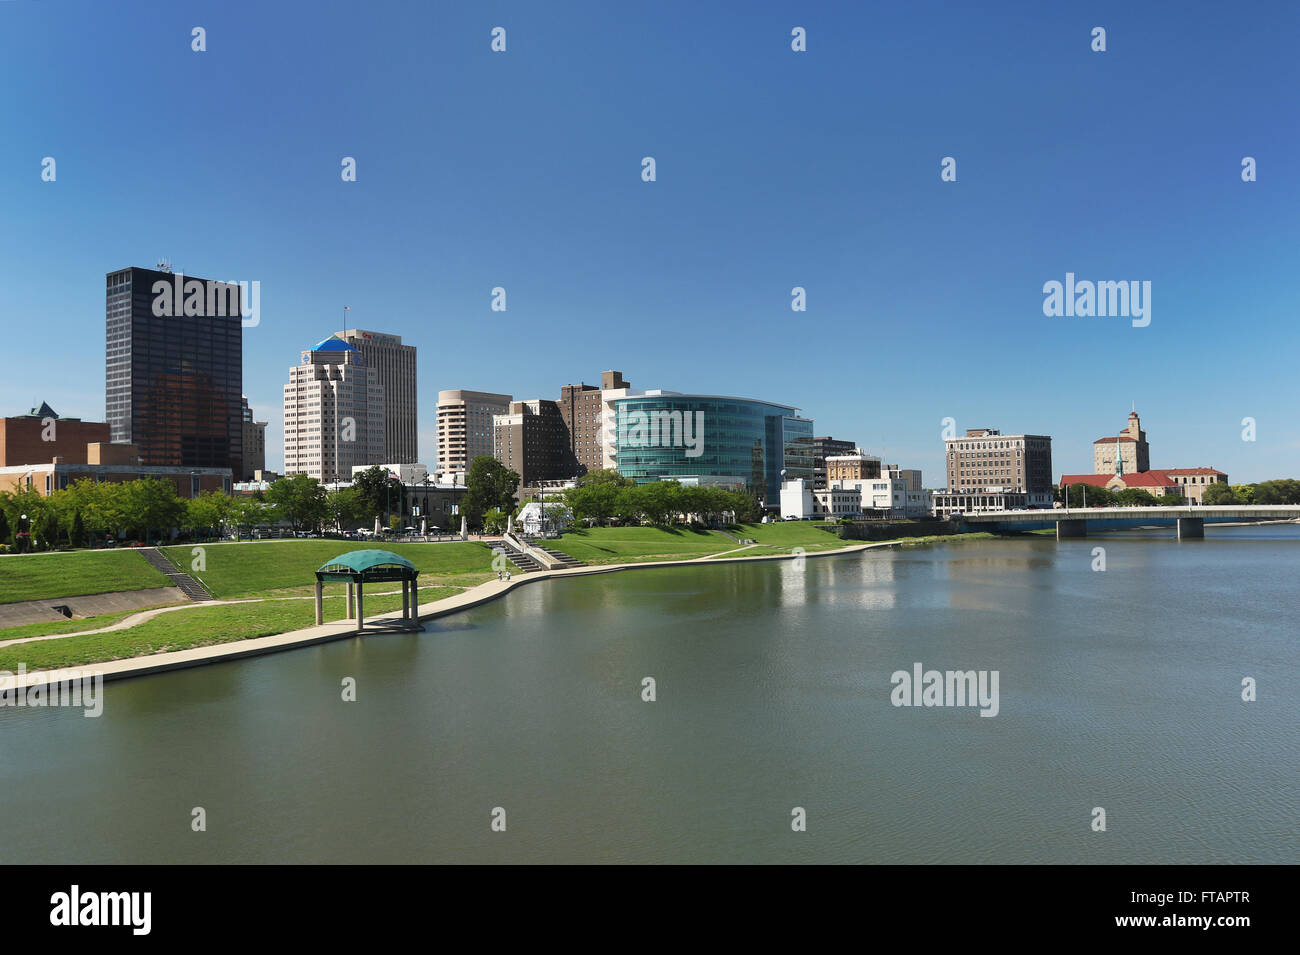 Morgen-Skyline von Dayton, Ohio, USA. Stockfoto